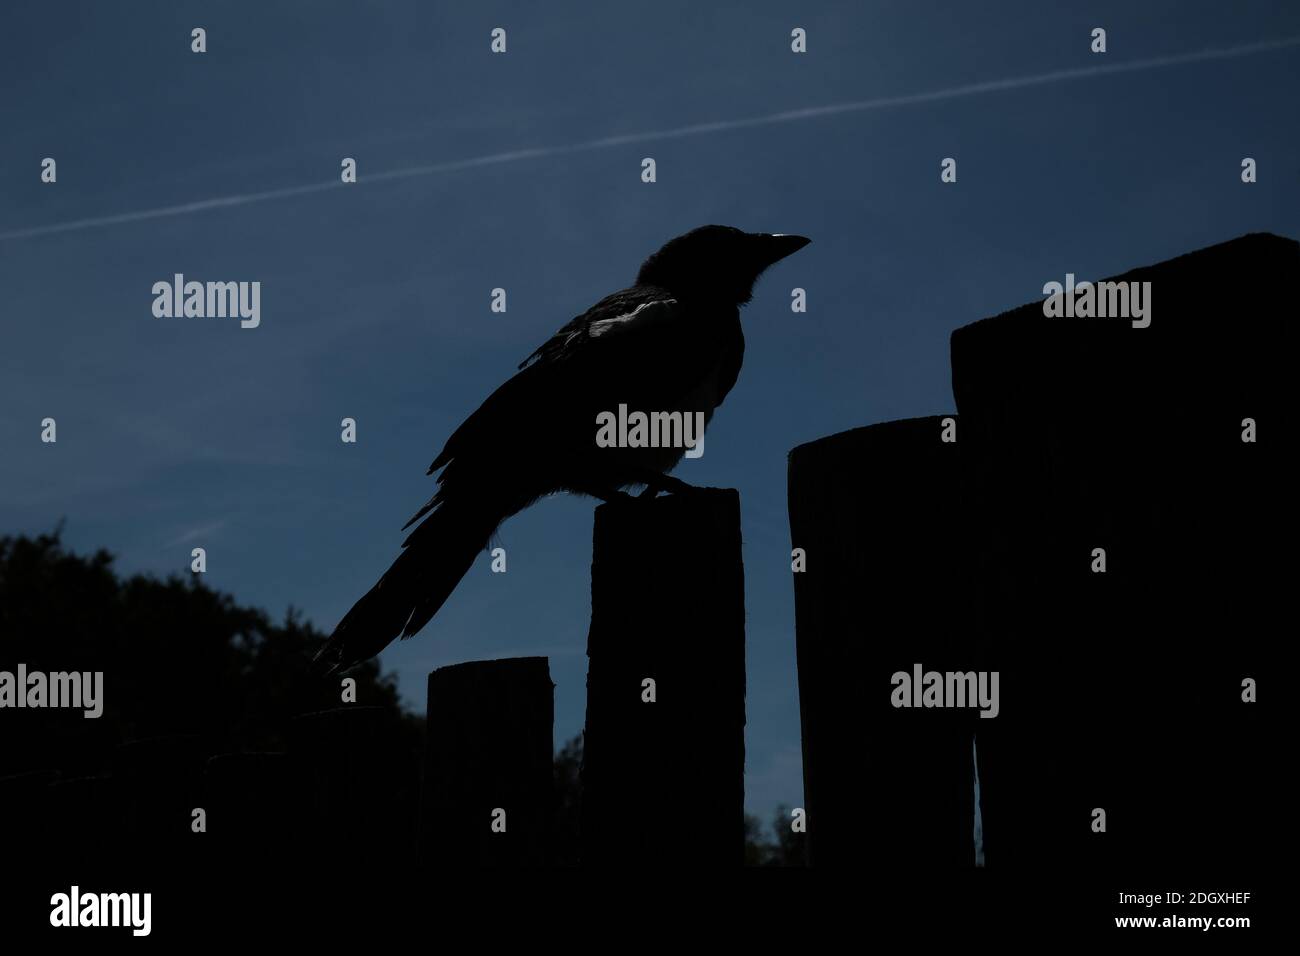 A magpie bird silhouette against a n blue sky . Stock Photo